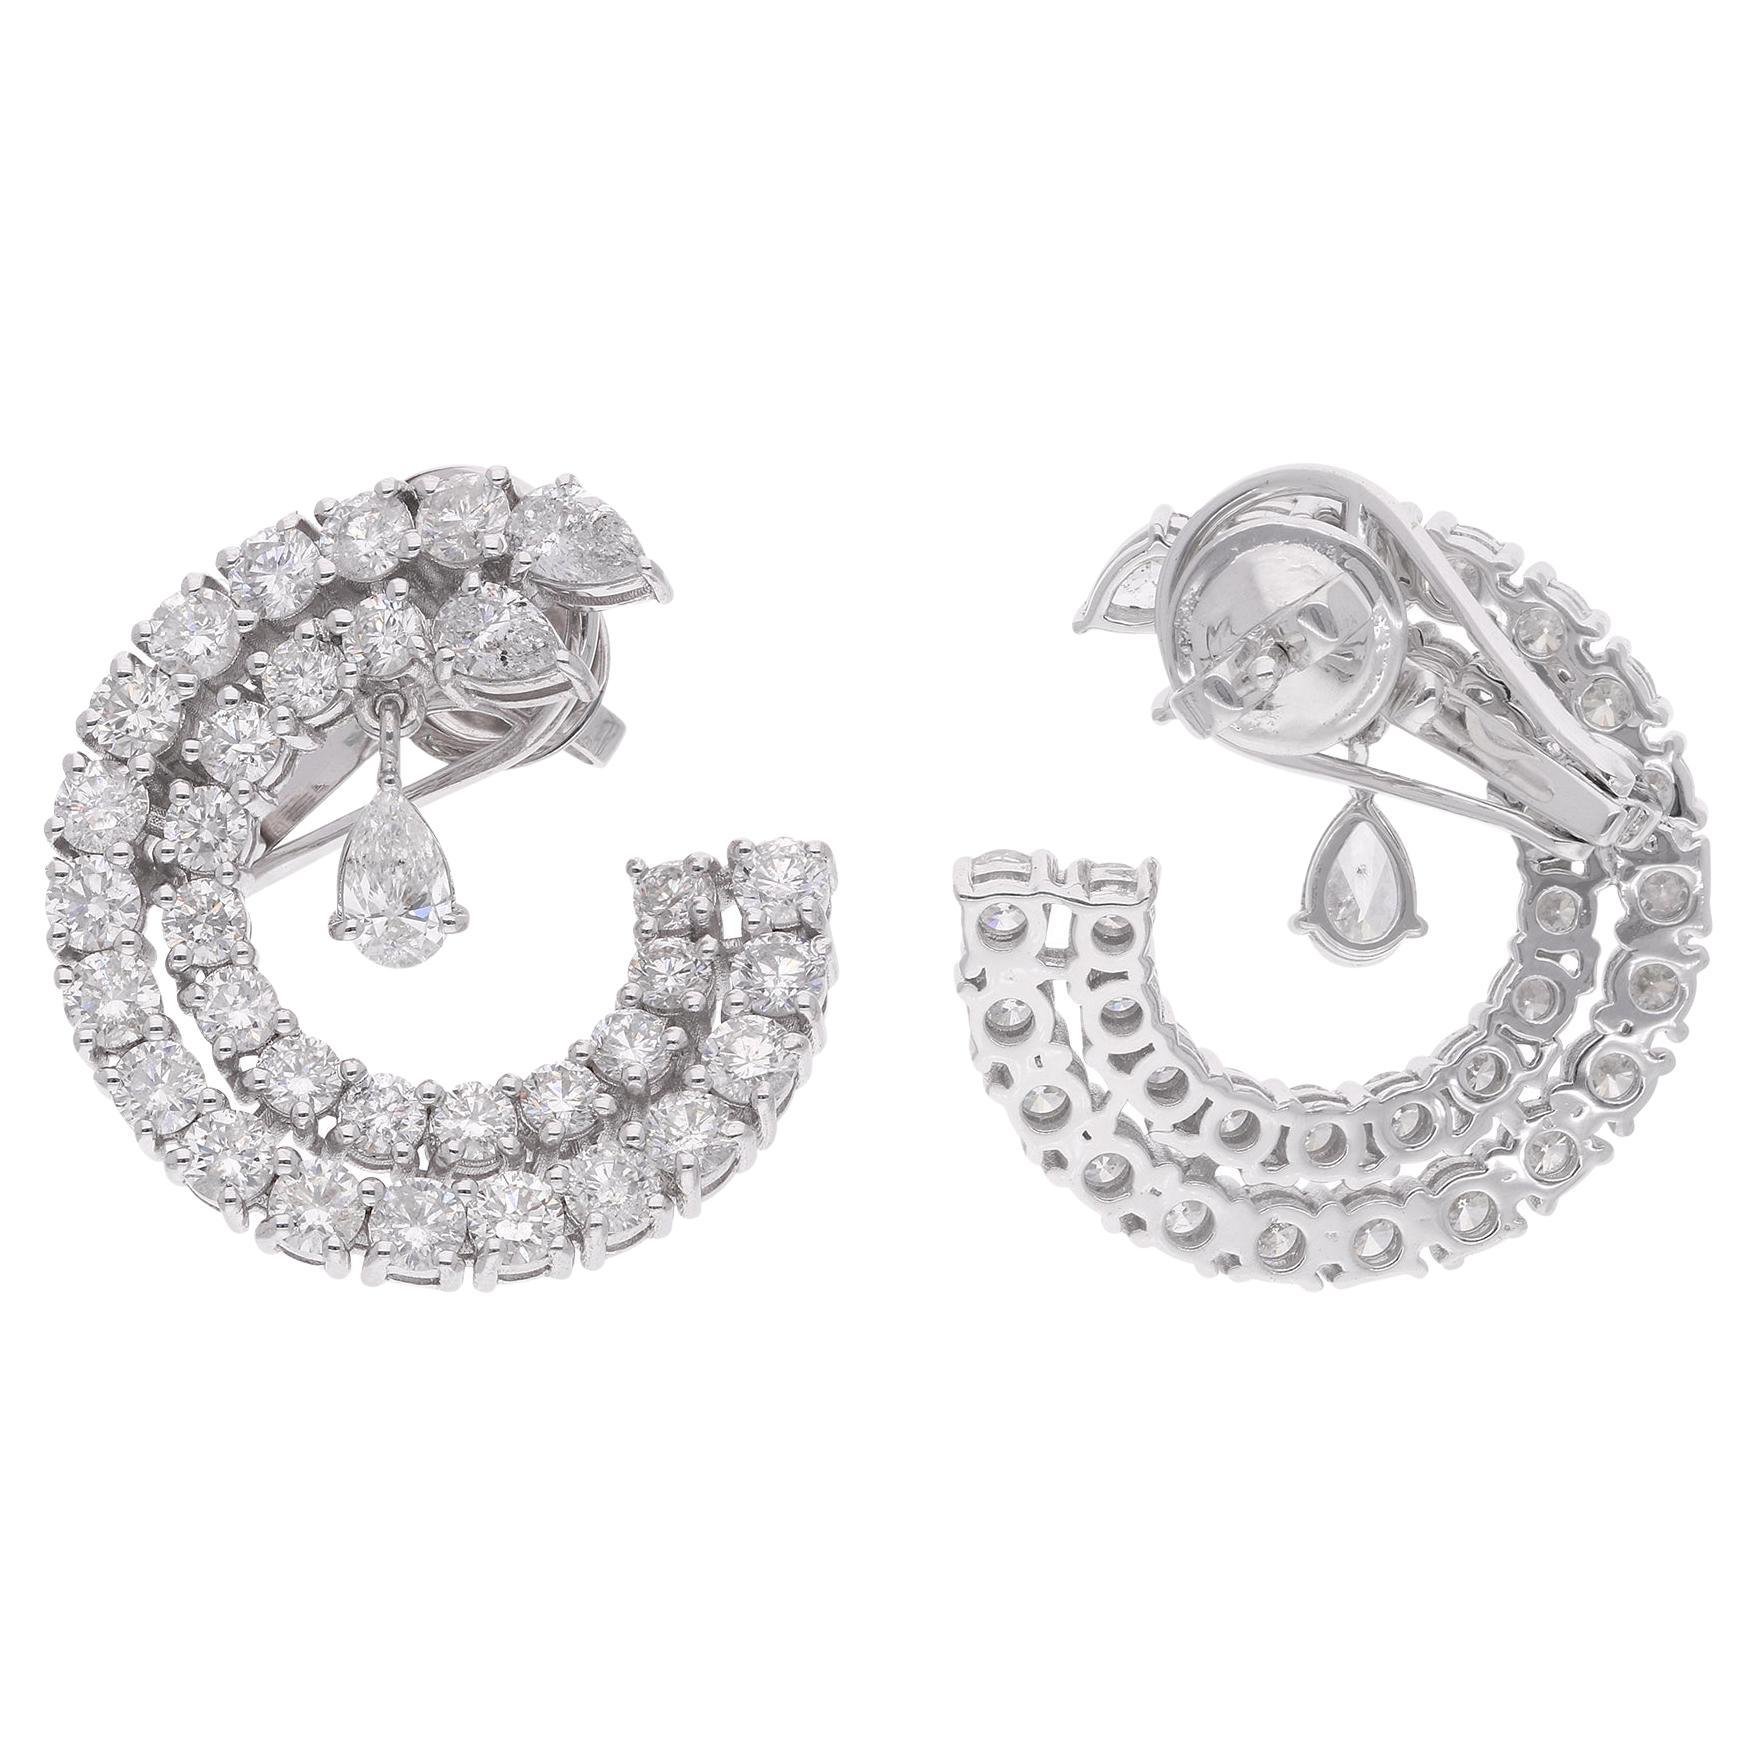 Real 5 Carat Pear & Round Diamond Earrings 18 Karat White Gold Handmade Jewelry